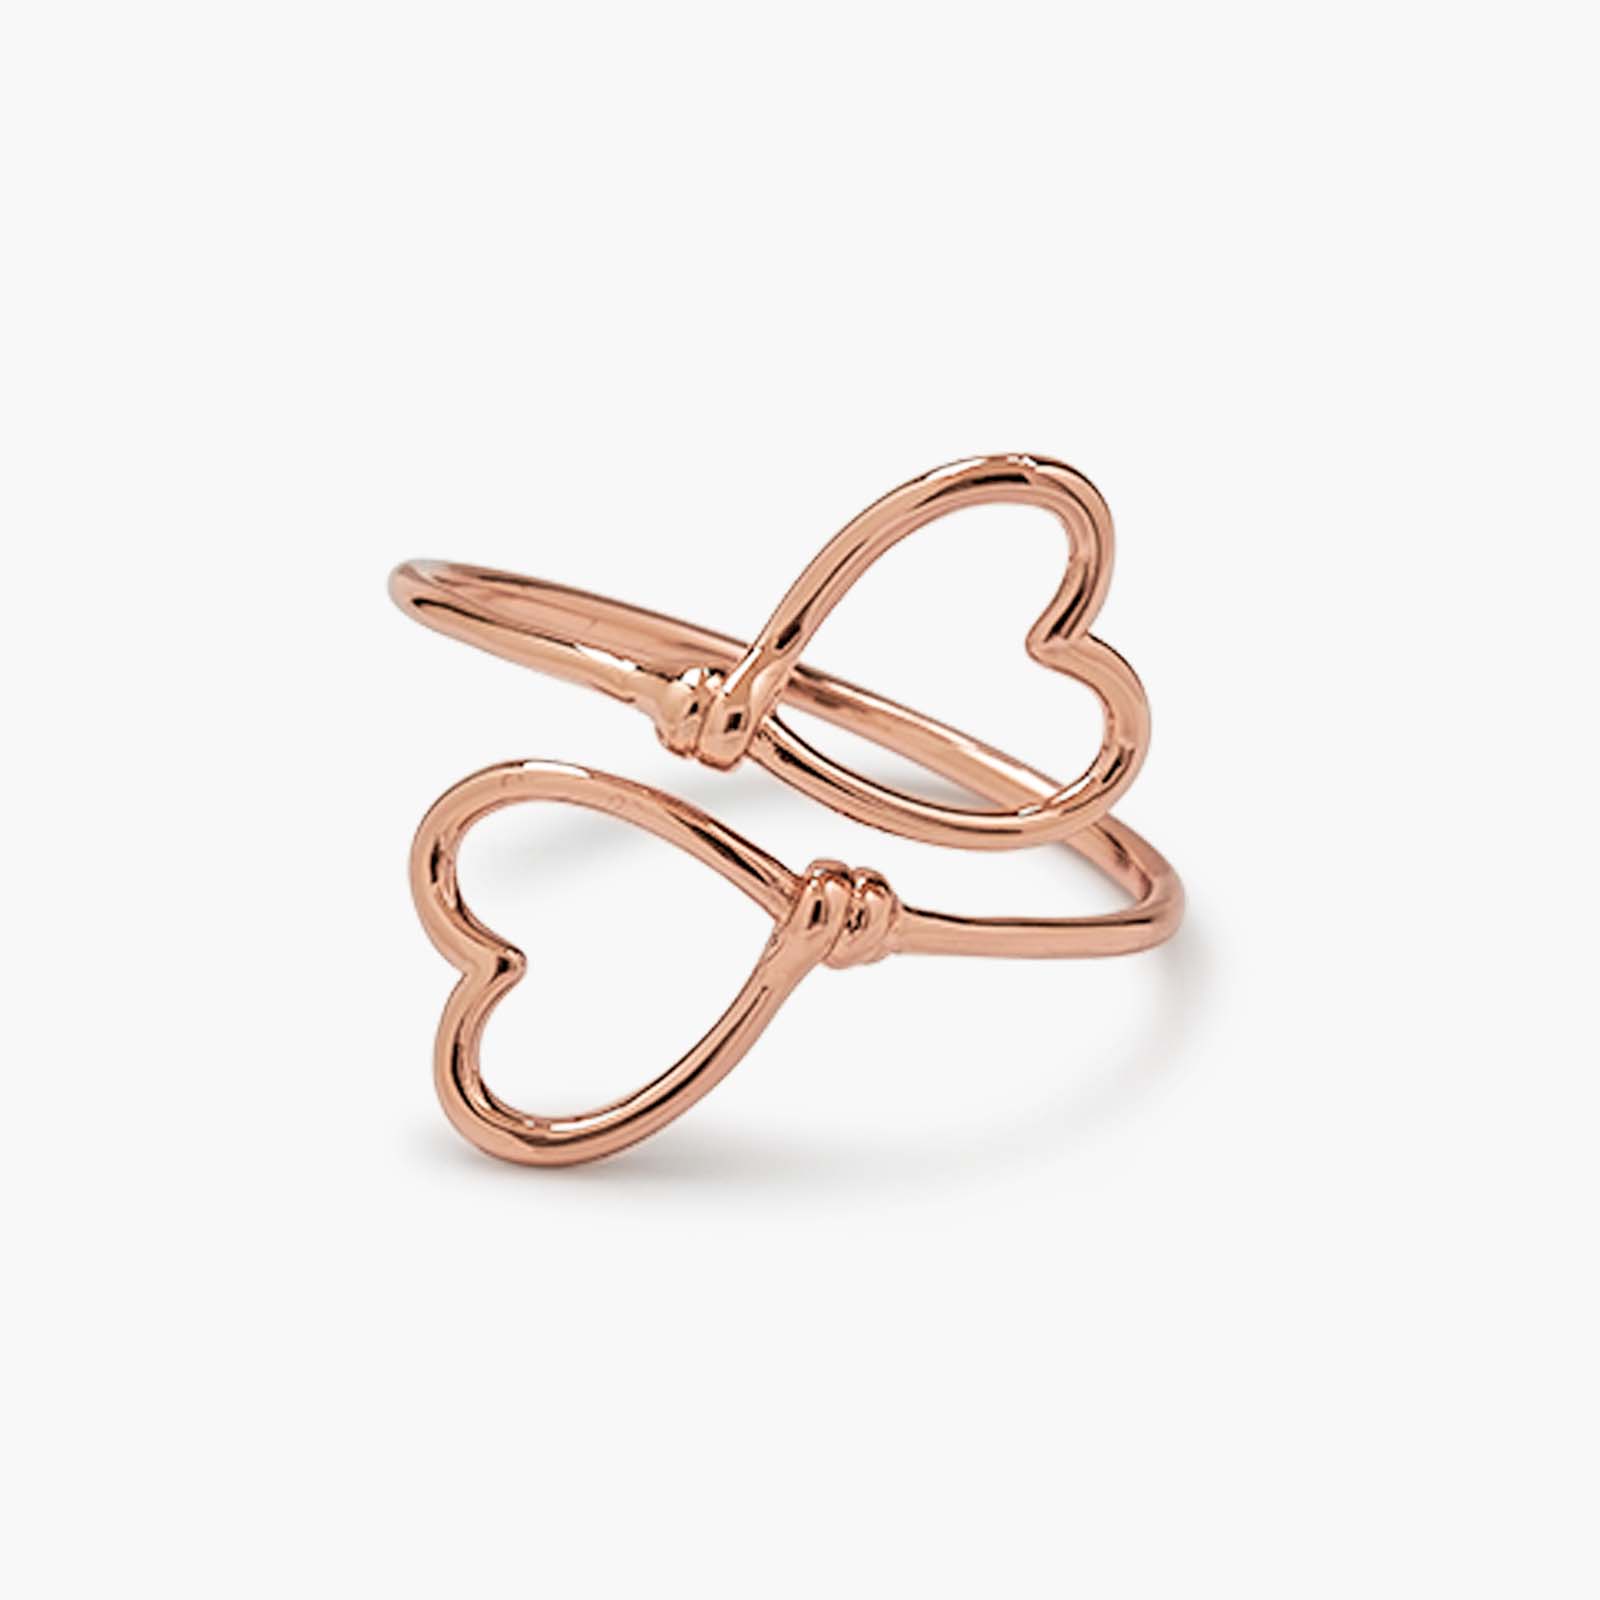 Copper Large Sparkly Stretch Bracelet by MK Designs